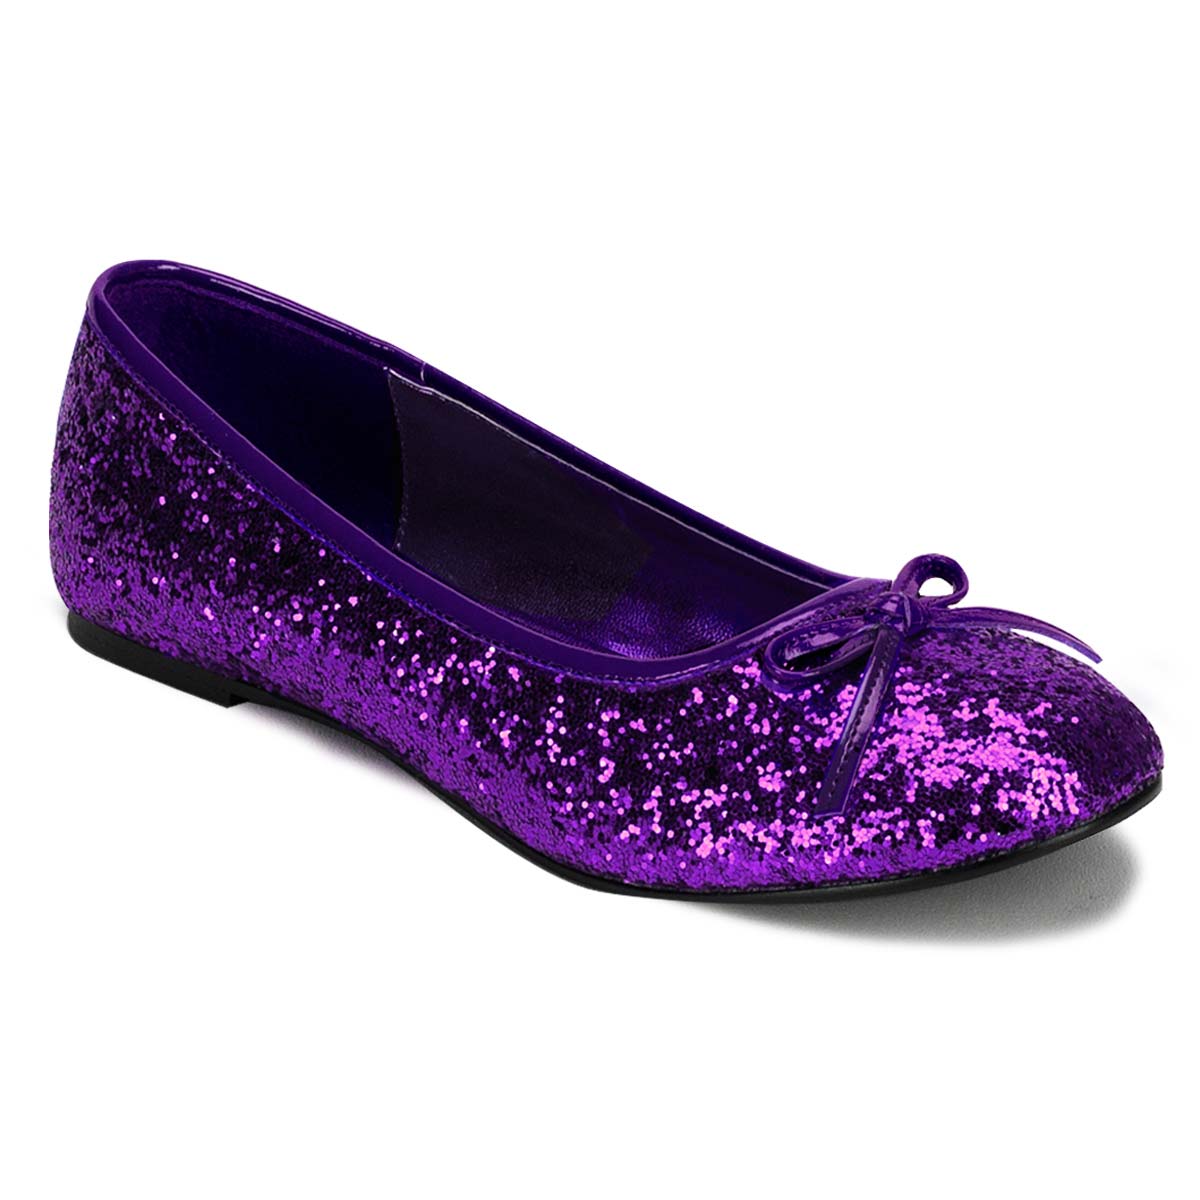 Pleaser Funtasma Star-16G - Purple Glitter in Shoes & Flats - $43.99